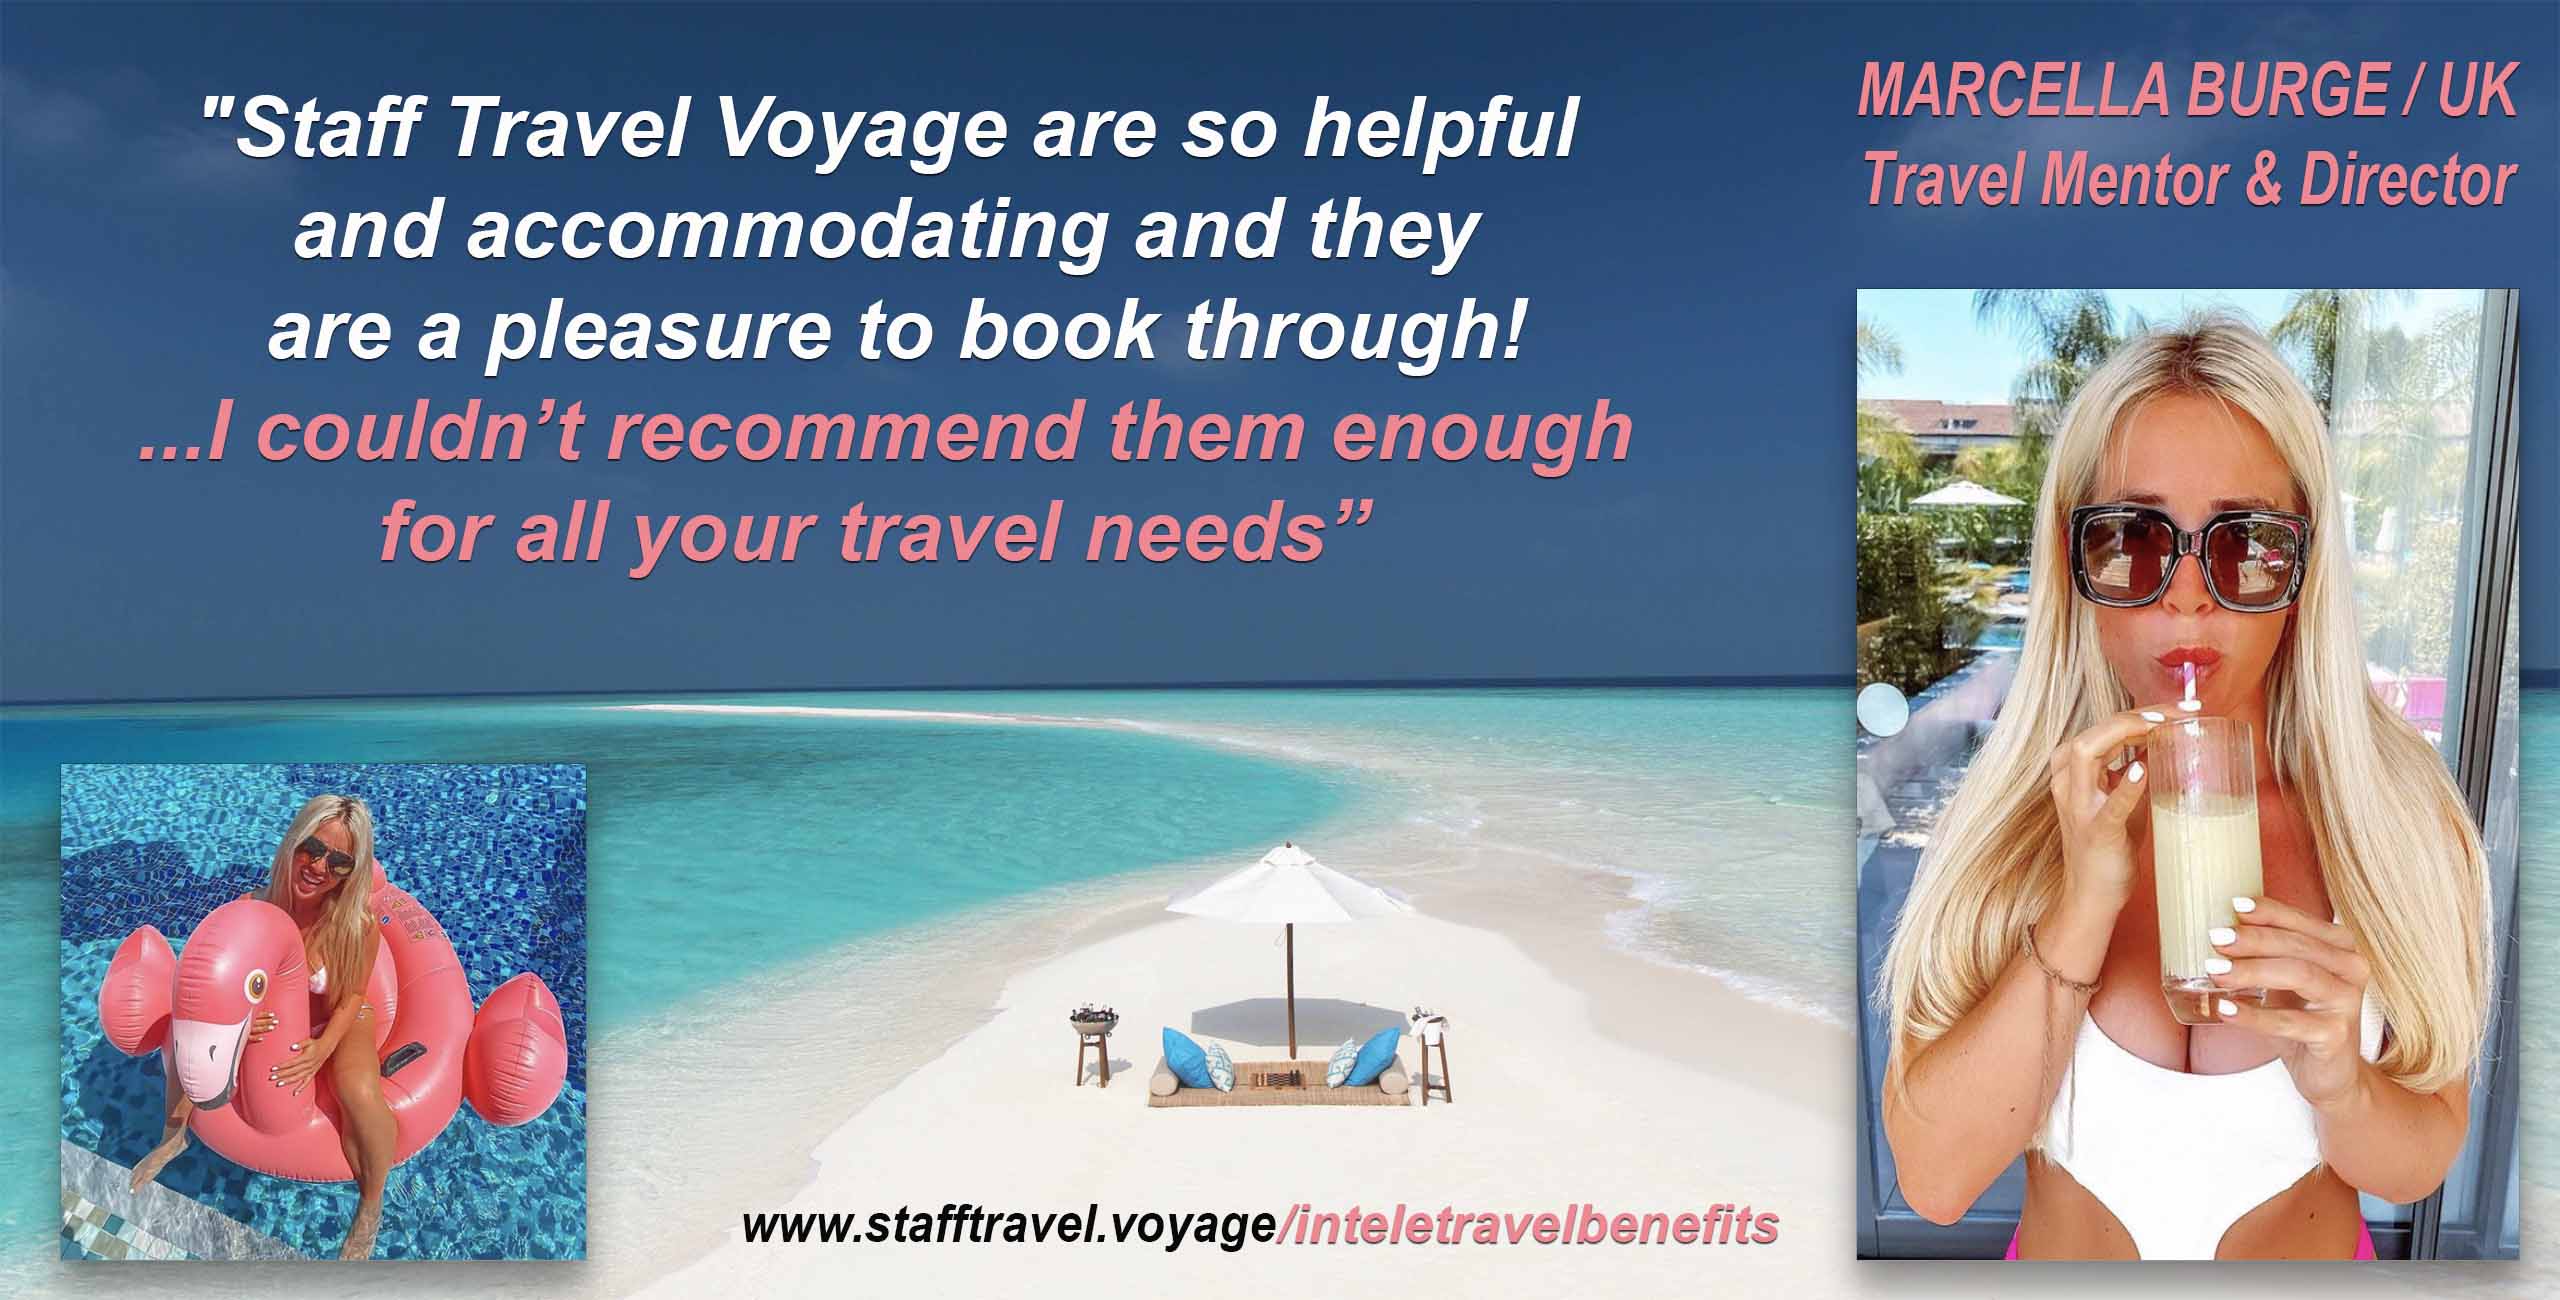 staff travel voyage inteletravel